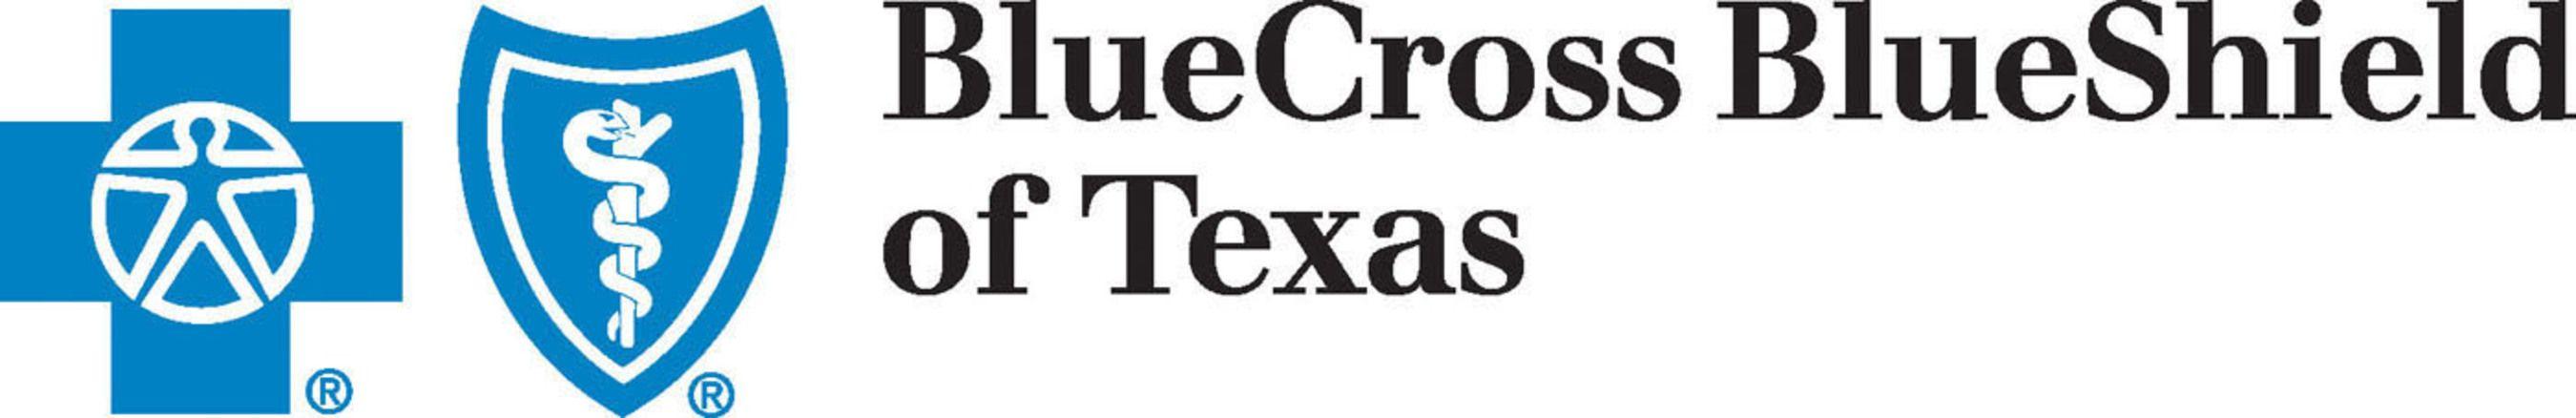 Blue Cross Blue Shield of Texas Logo - Blue Cross and Blue Shield of Texas Offers New, Coordinated Health ...